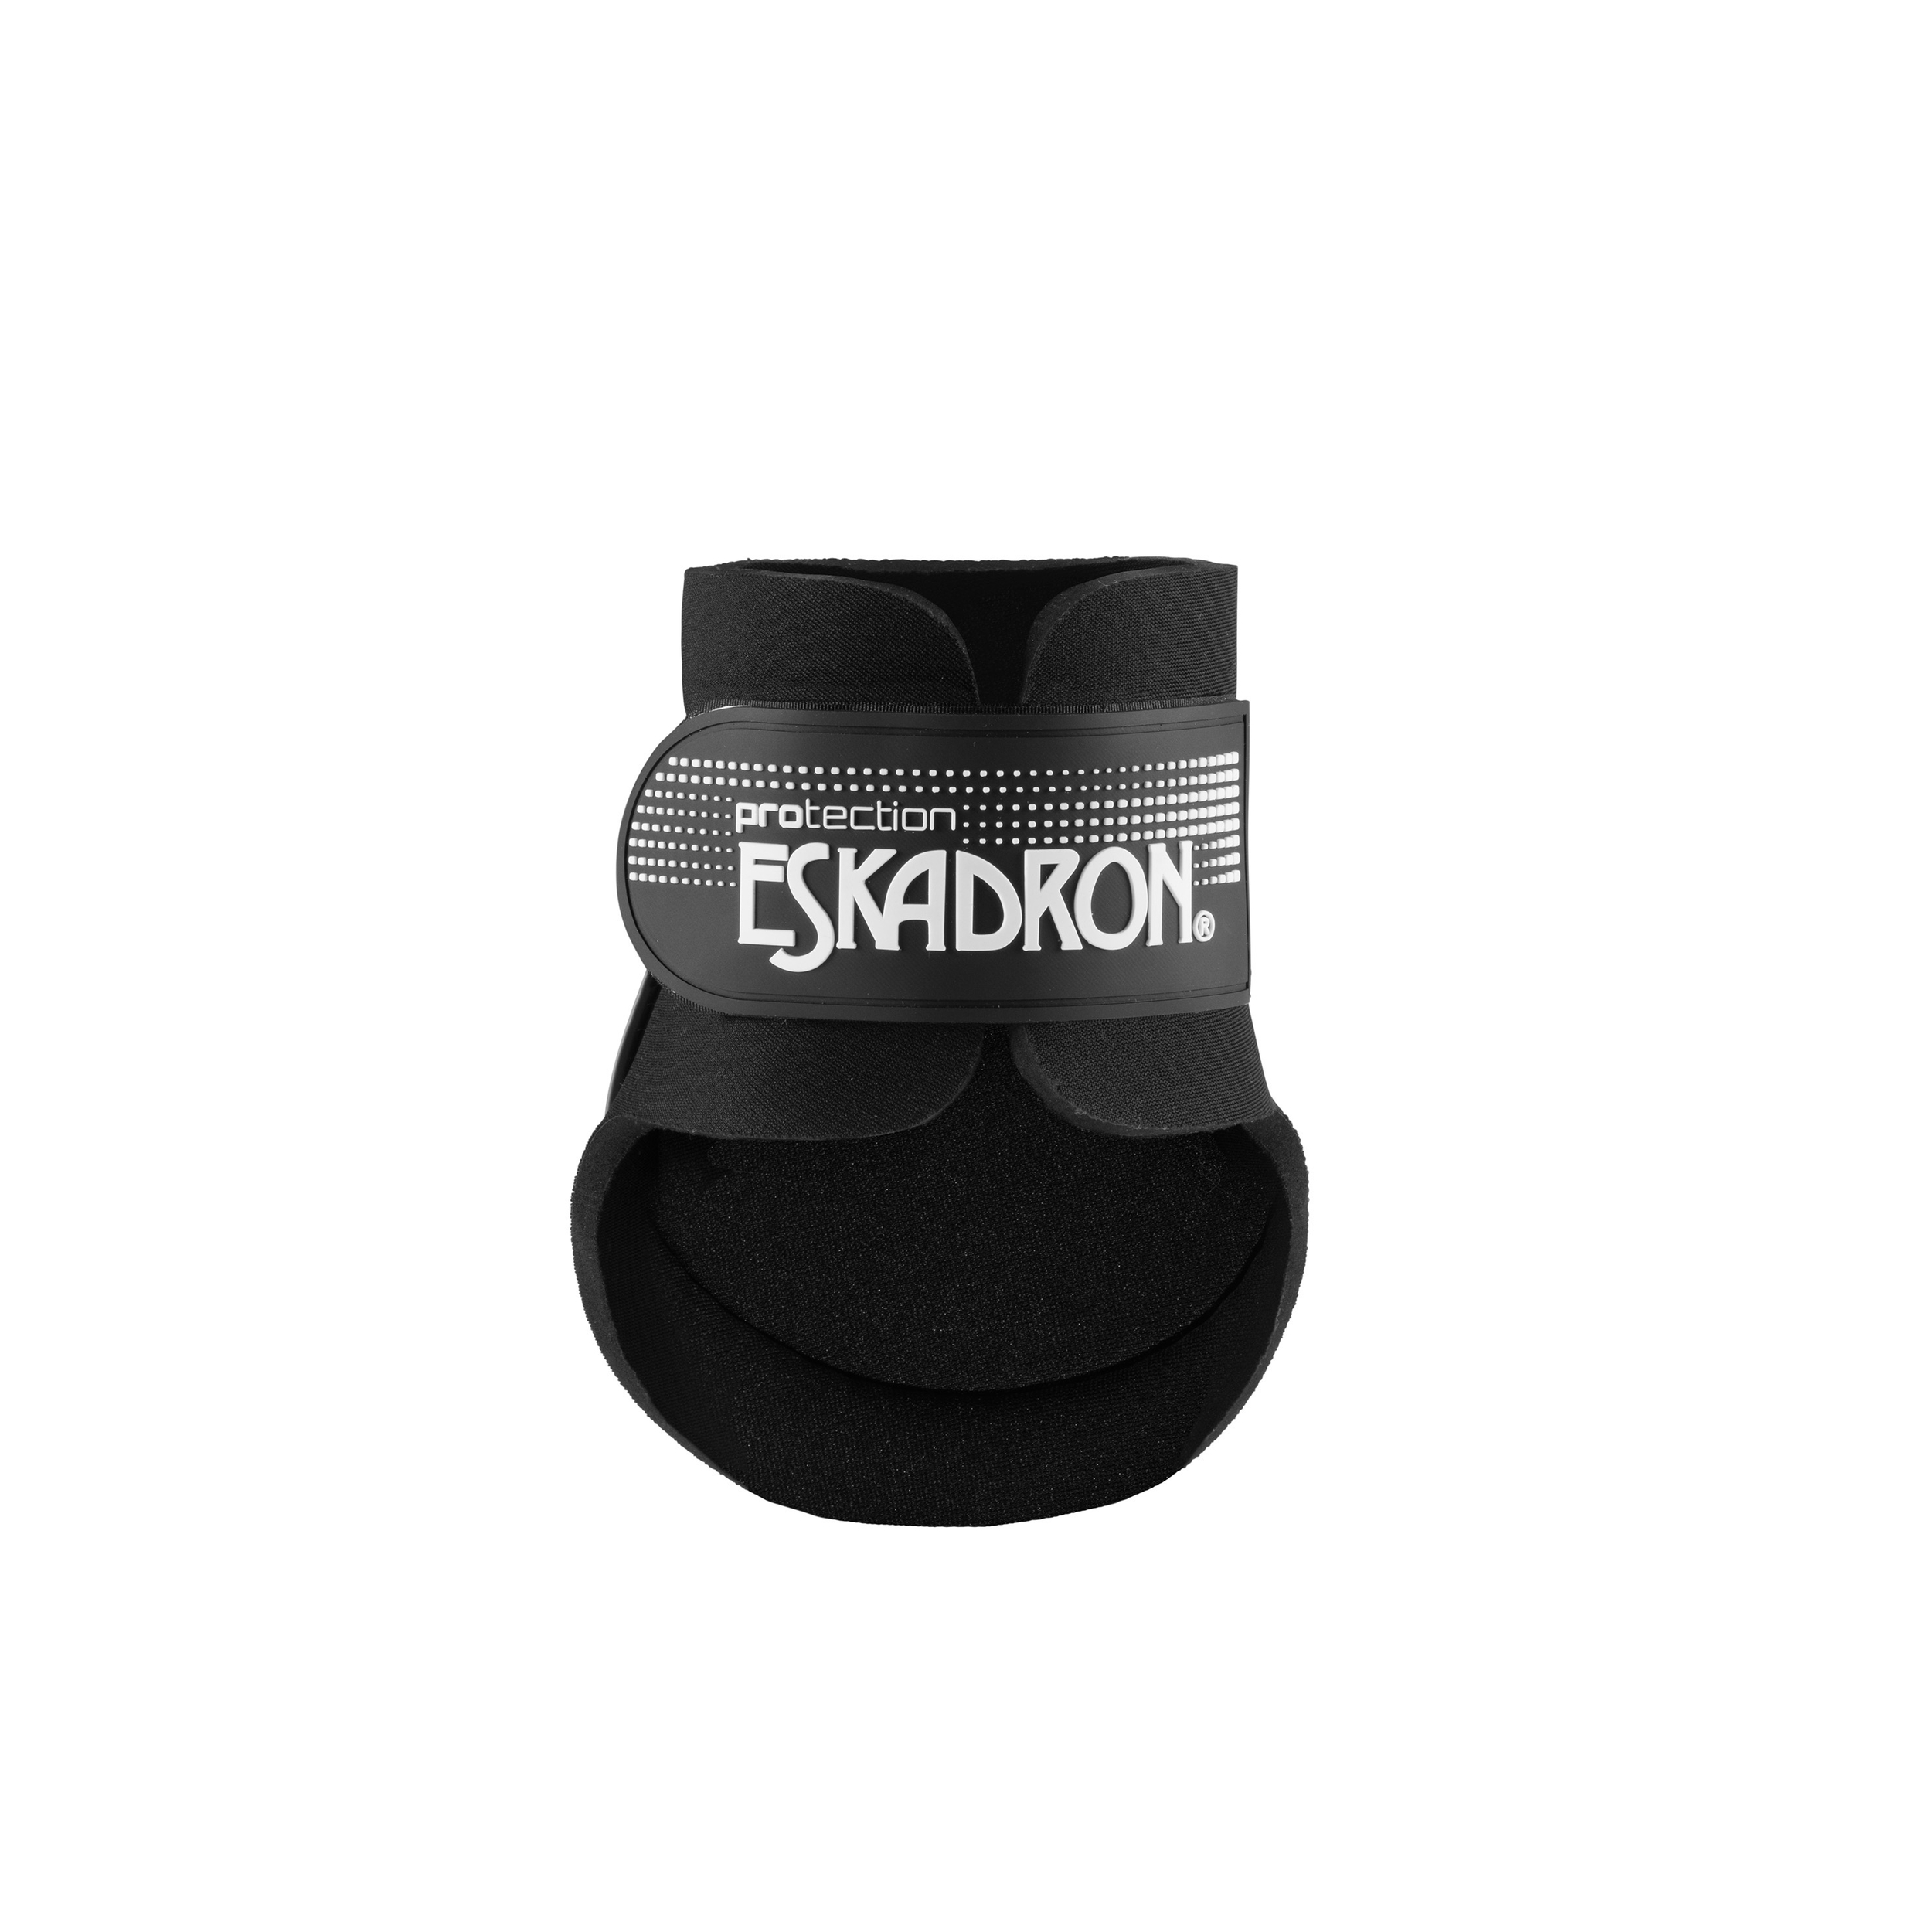 ESKADRON Basics Streichkappen Protection hinten - blackberry - WB - 8